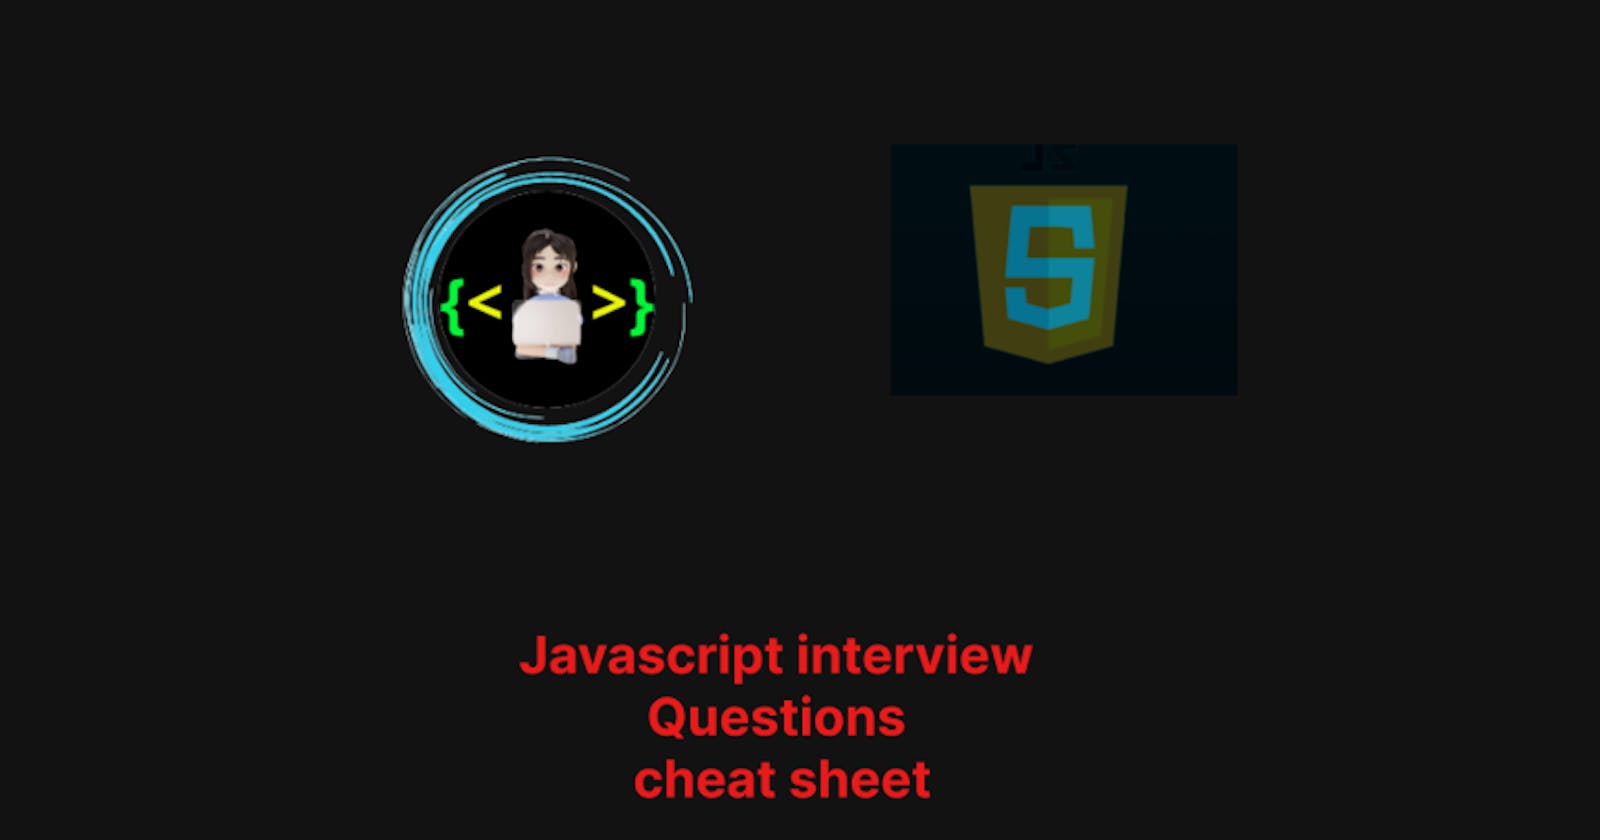 JavaScript Interview Prep Cheatsheet